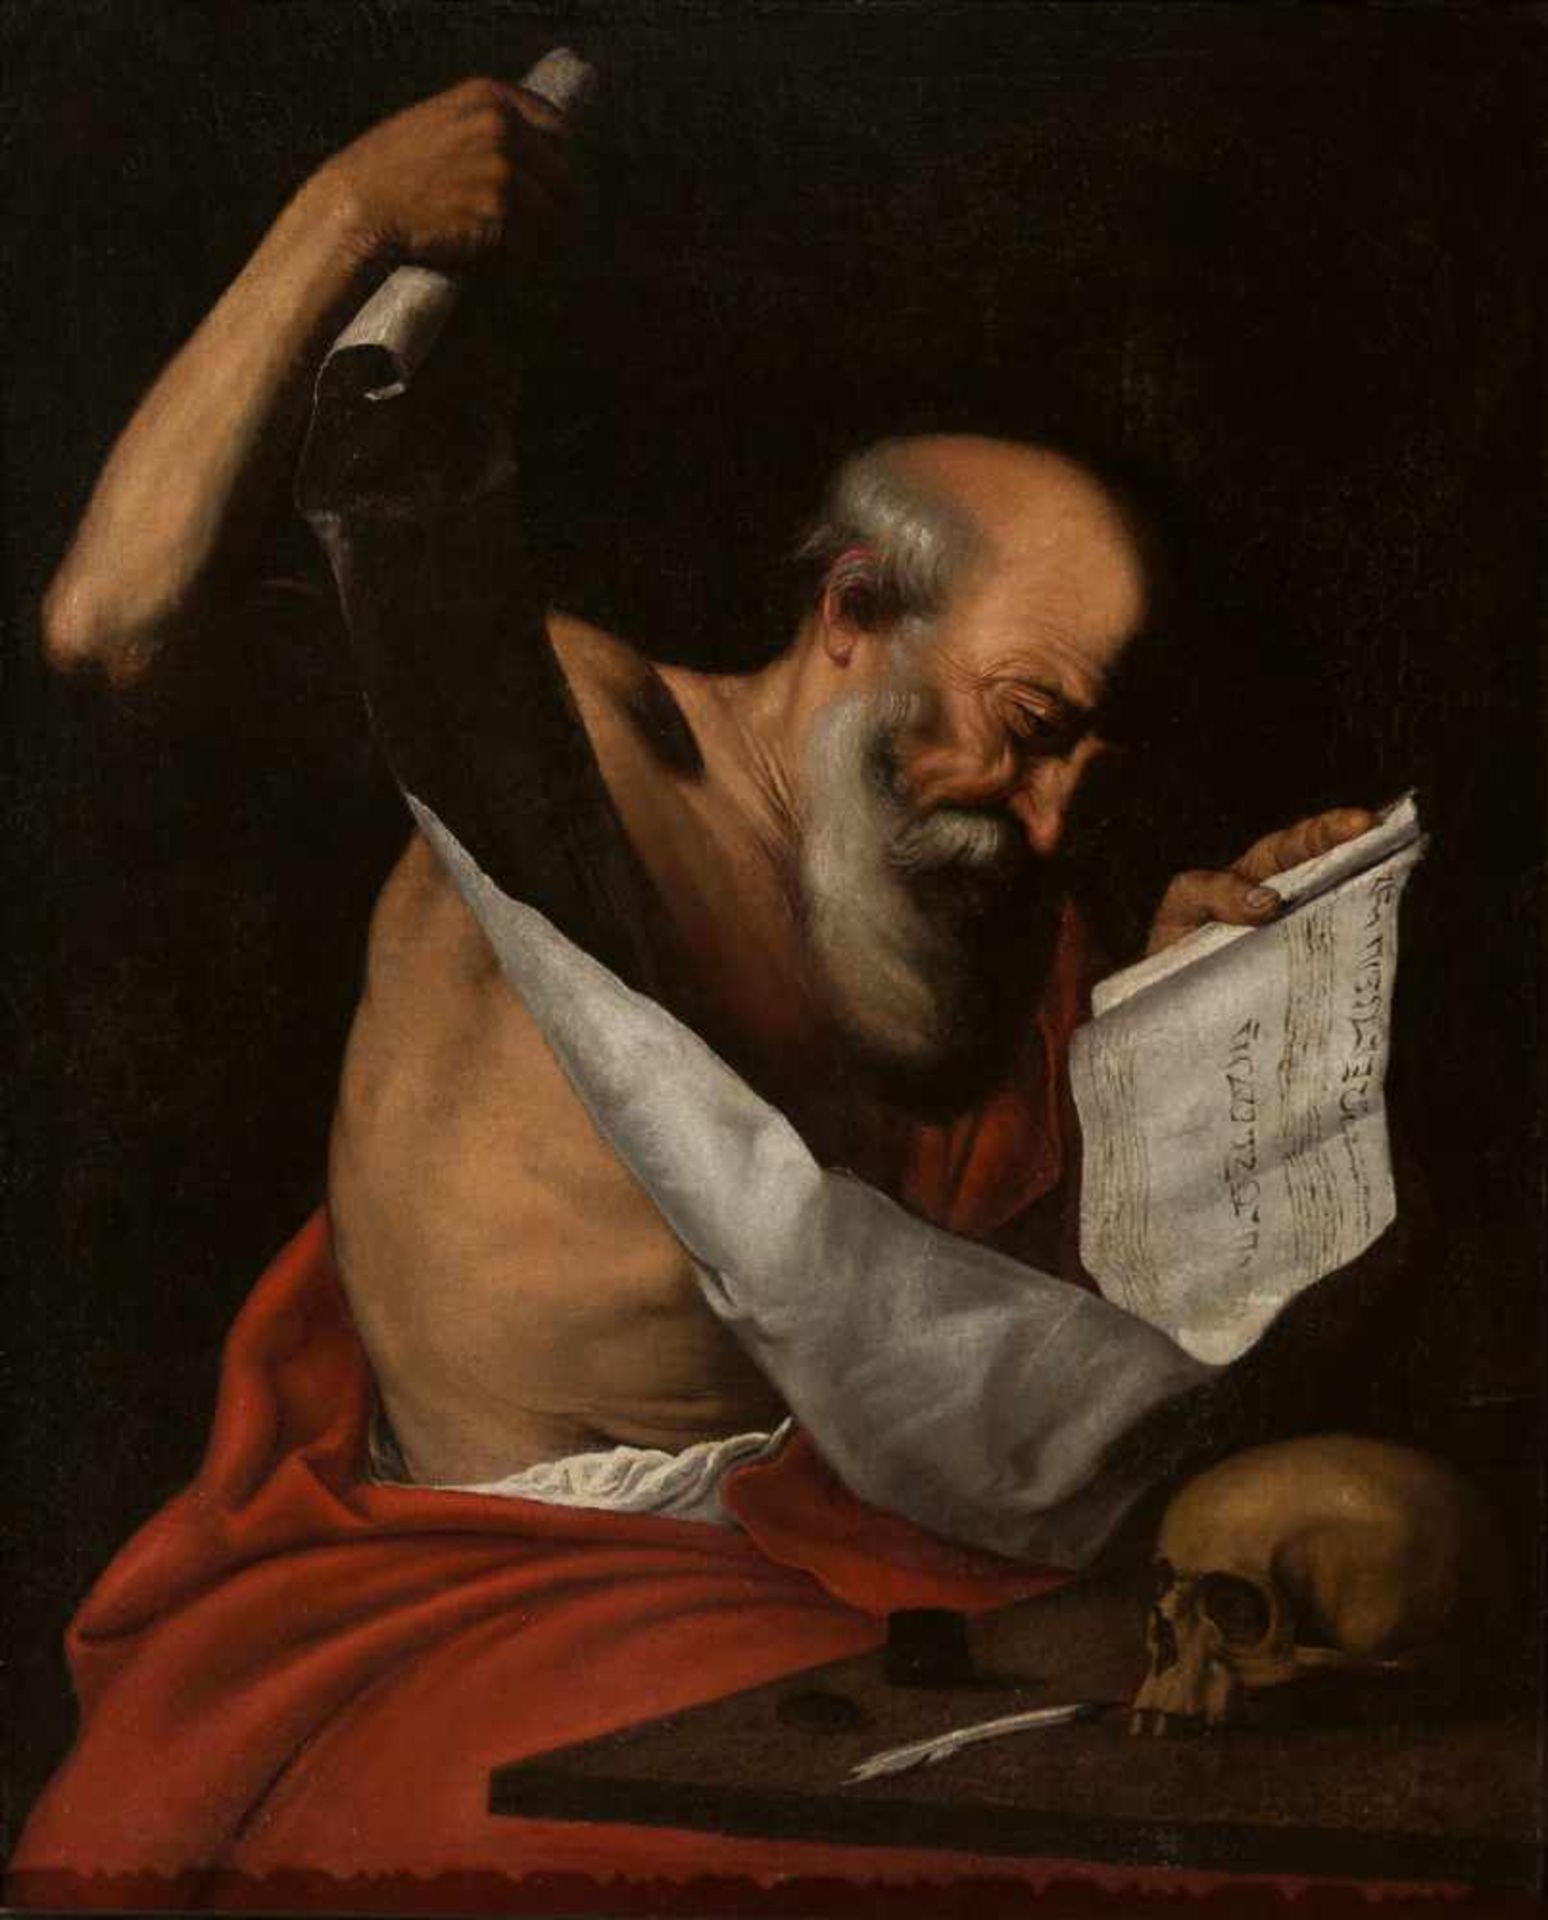 Hendryck van Somer (Lokeren, Belgium, 1607 - Naples, c. 1655) "St Geronimo" Oil on canvas.